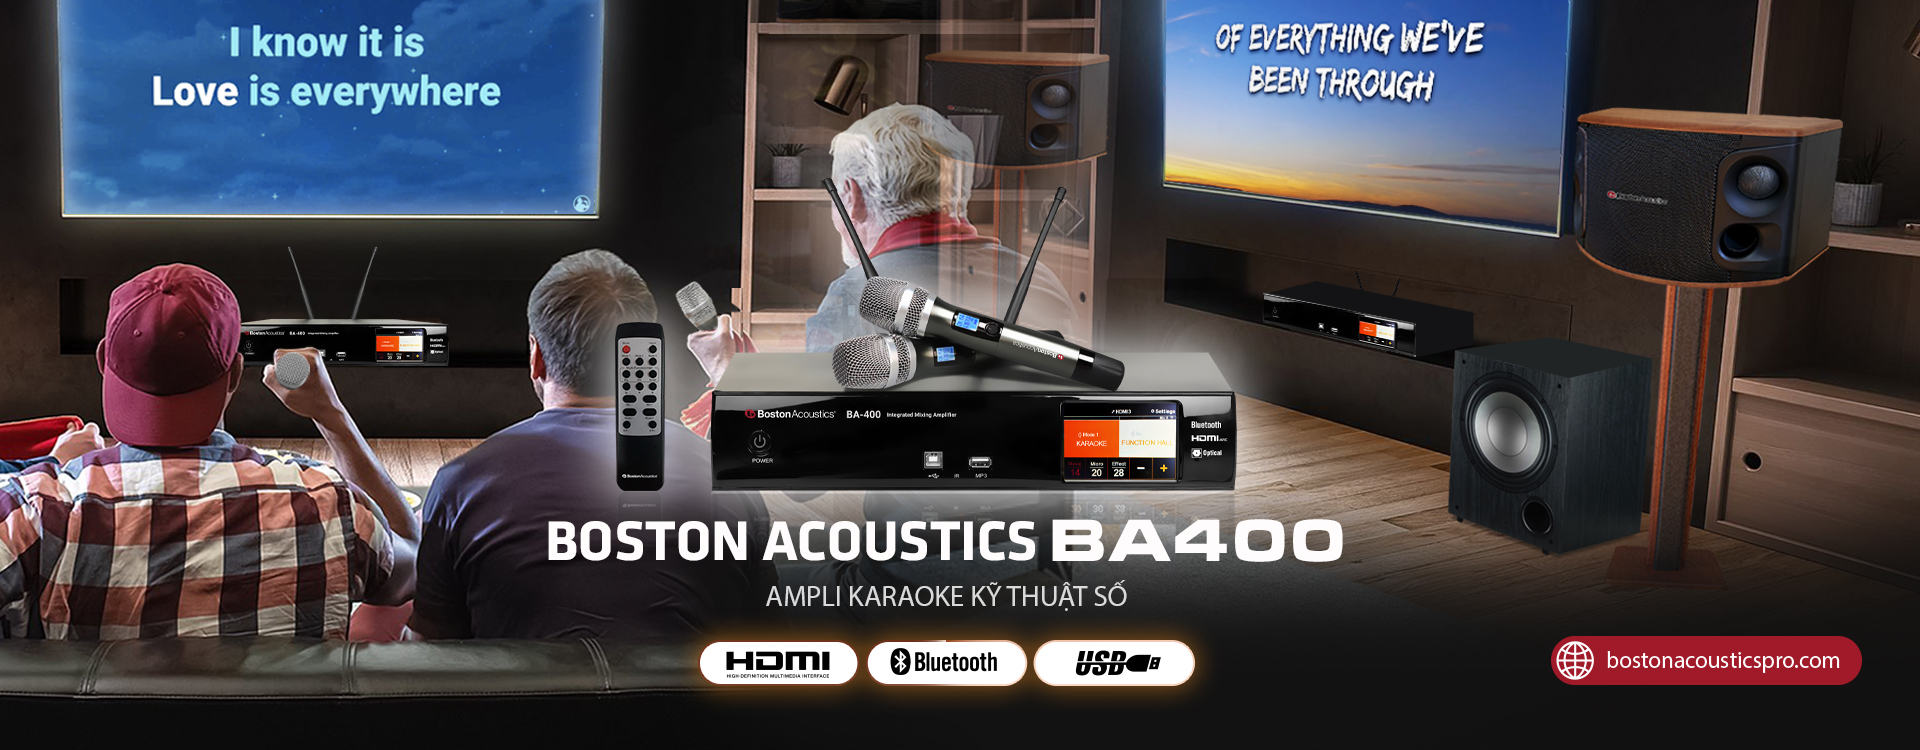 Ampli Boston Acoustics BA400